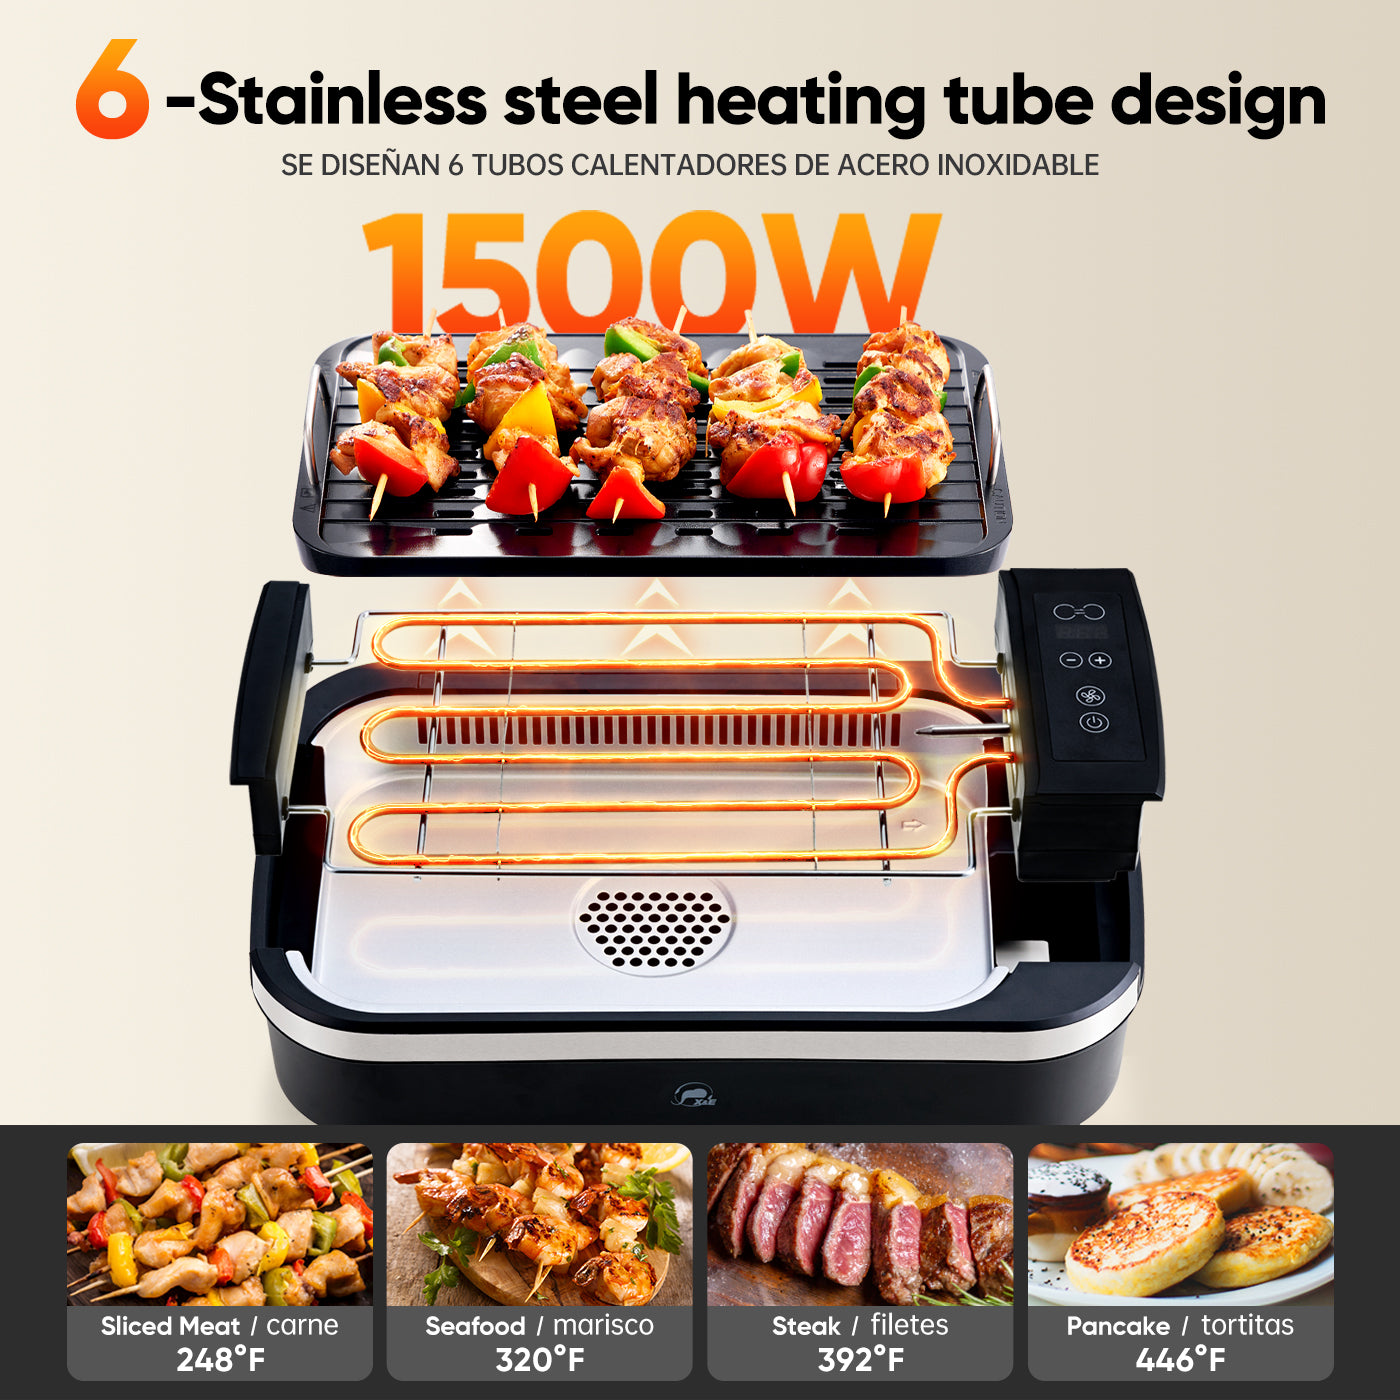 6-stainless steel heating tube design se disenan 6 tubos calentadores de acero inoxidable